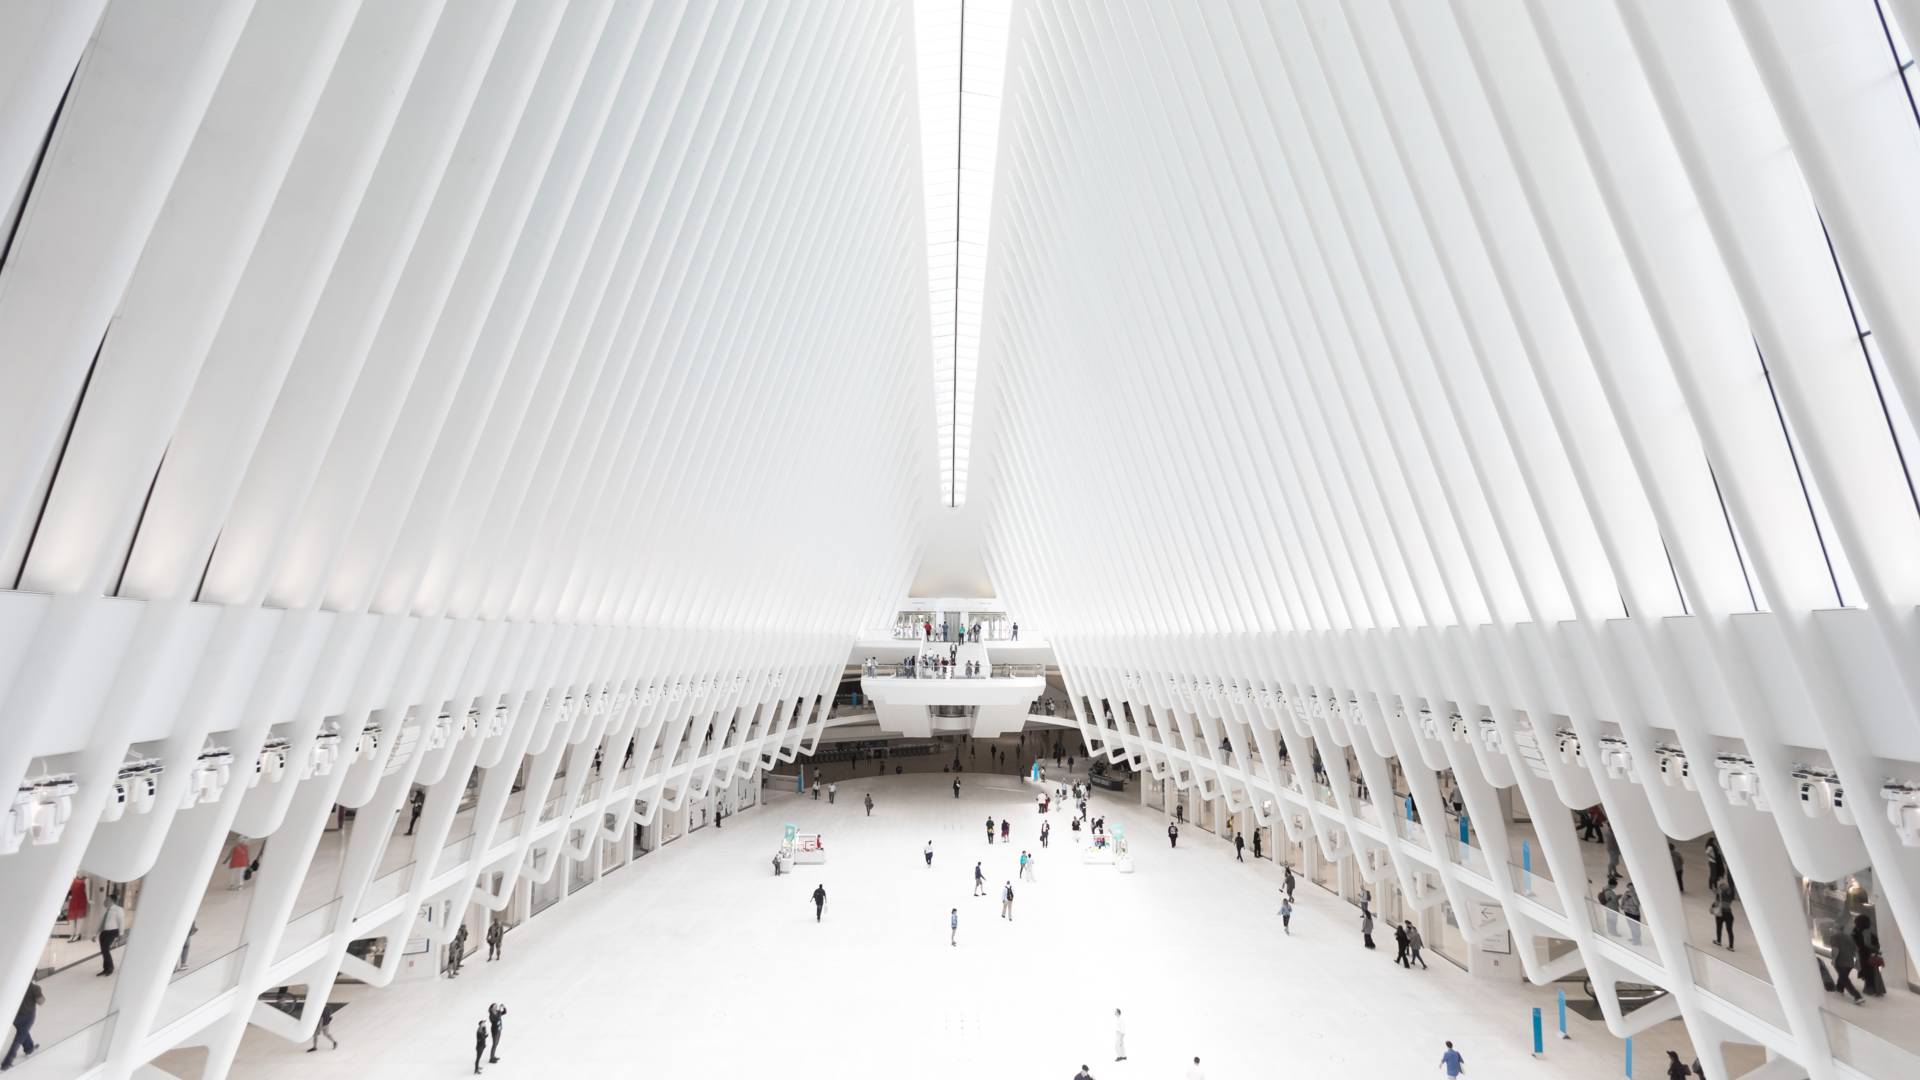 Blick in die Oculus U-Bahn-Station in New York - Quelle: Dorian Mongel via unsplash.com